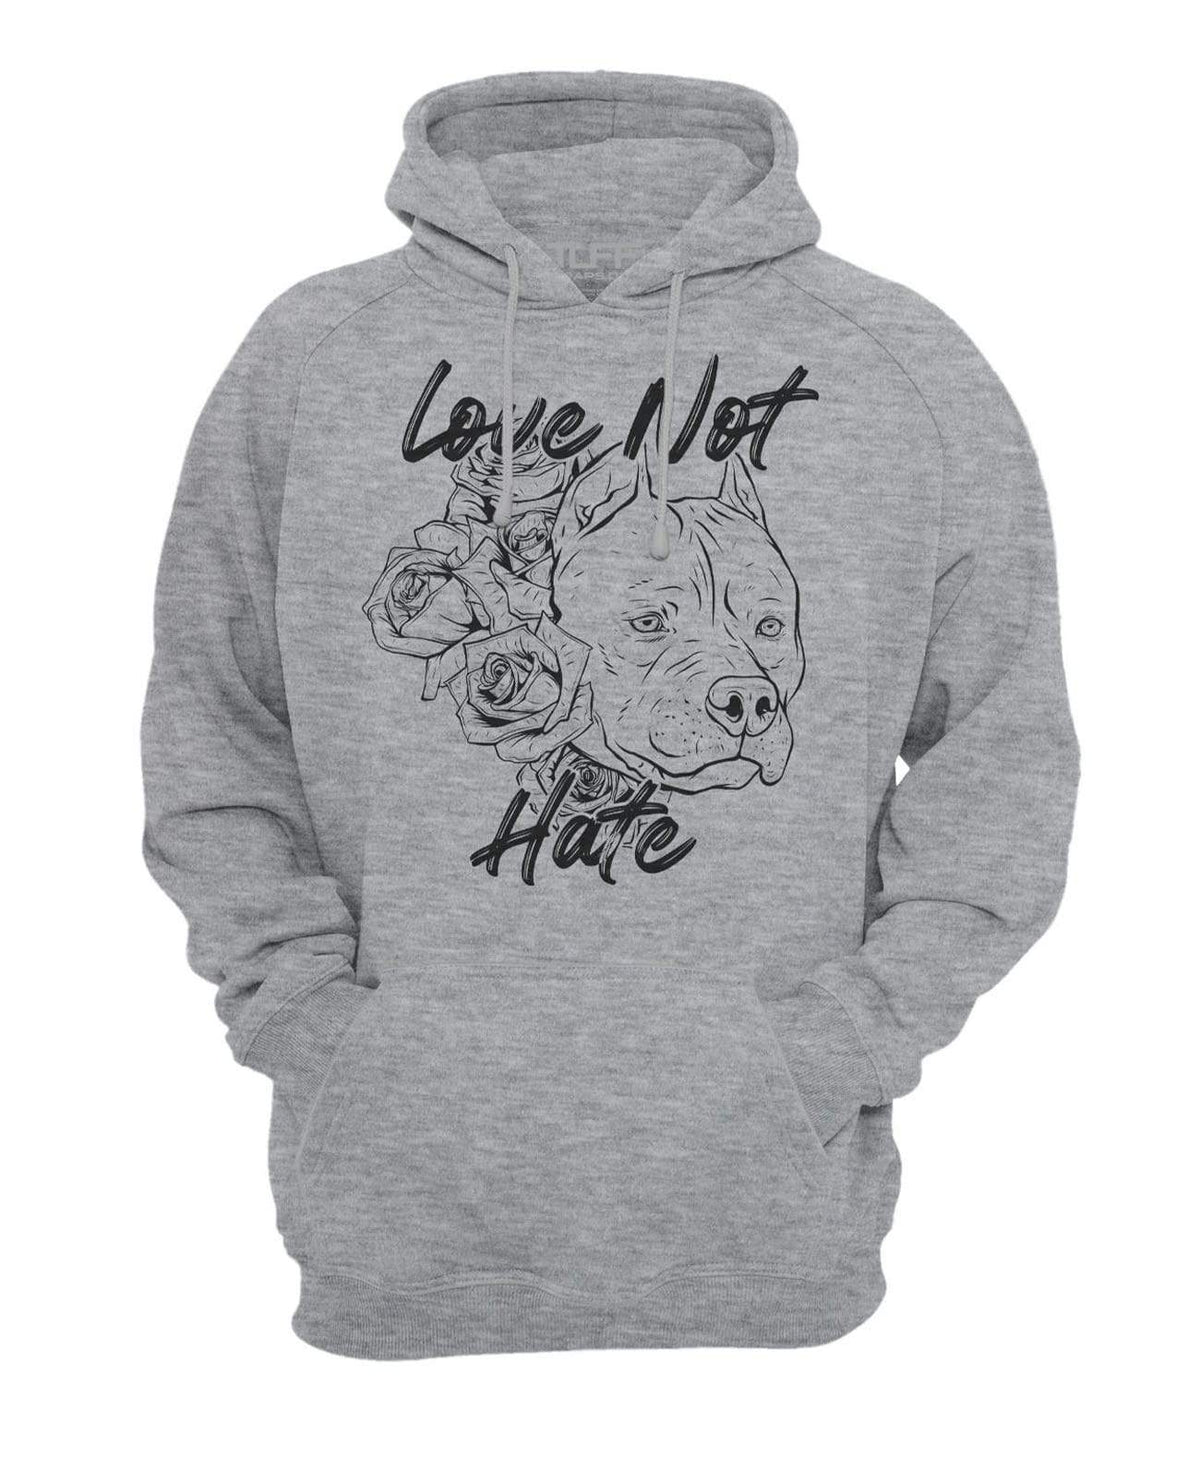 Love Not Hate Hooded Sweatshirt XS / Gray TuffWraps.com